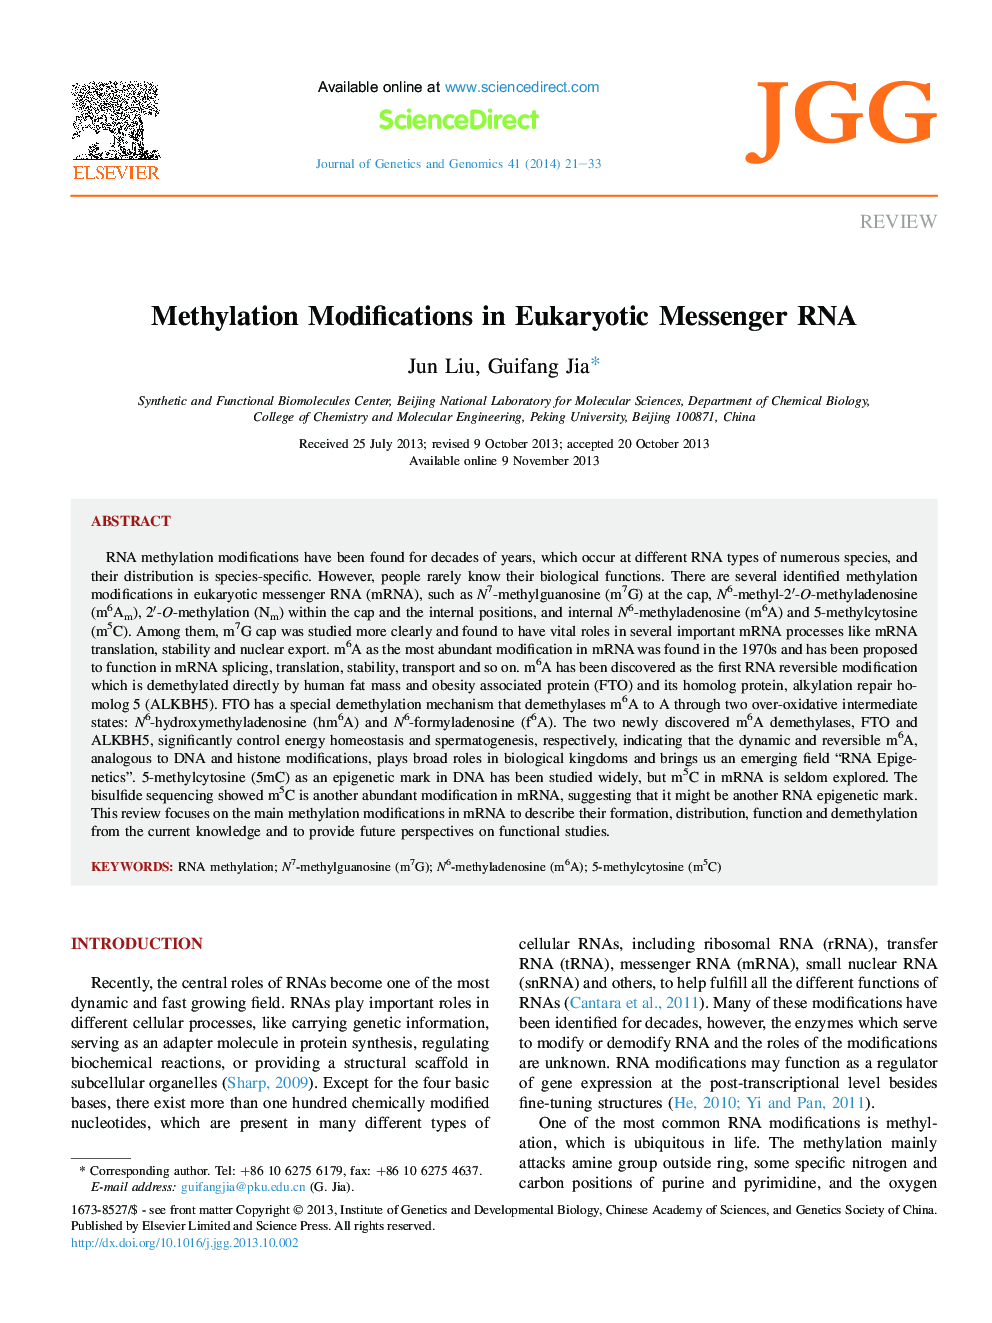 Methylation Modifications in Eukaryotic Messenger RNA